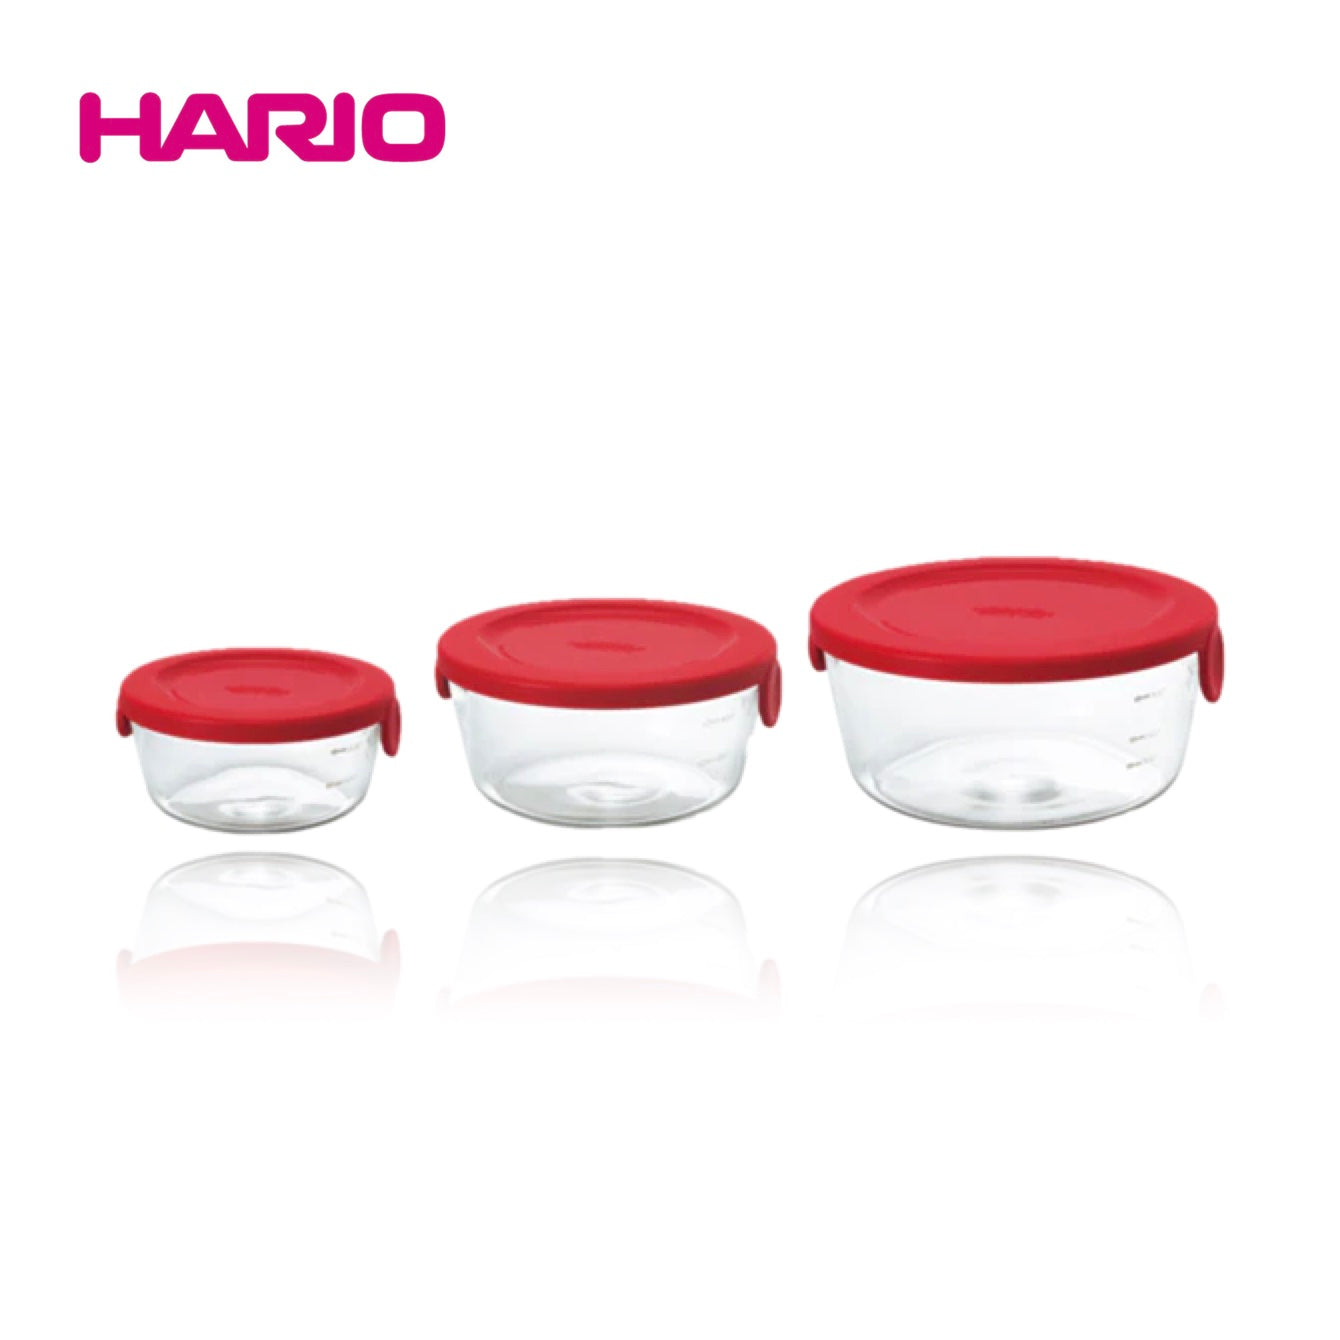 Hario Heatproof Glass Food Storage Container 3 Piece Set (Round/Square)